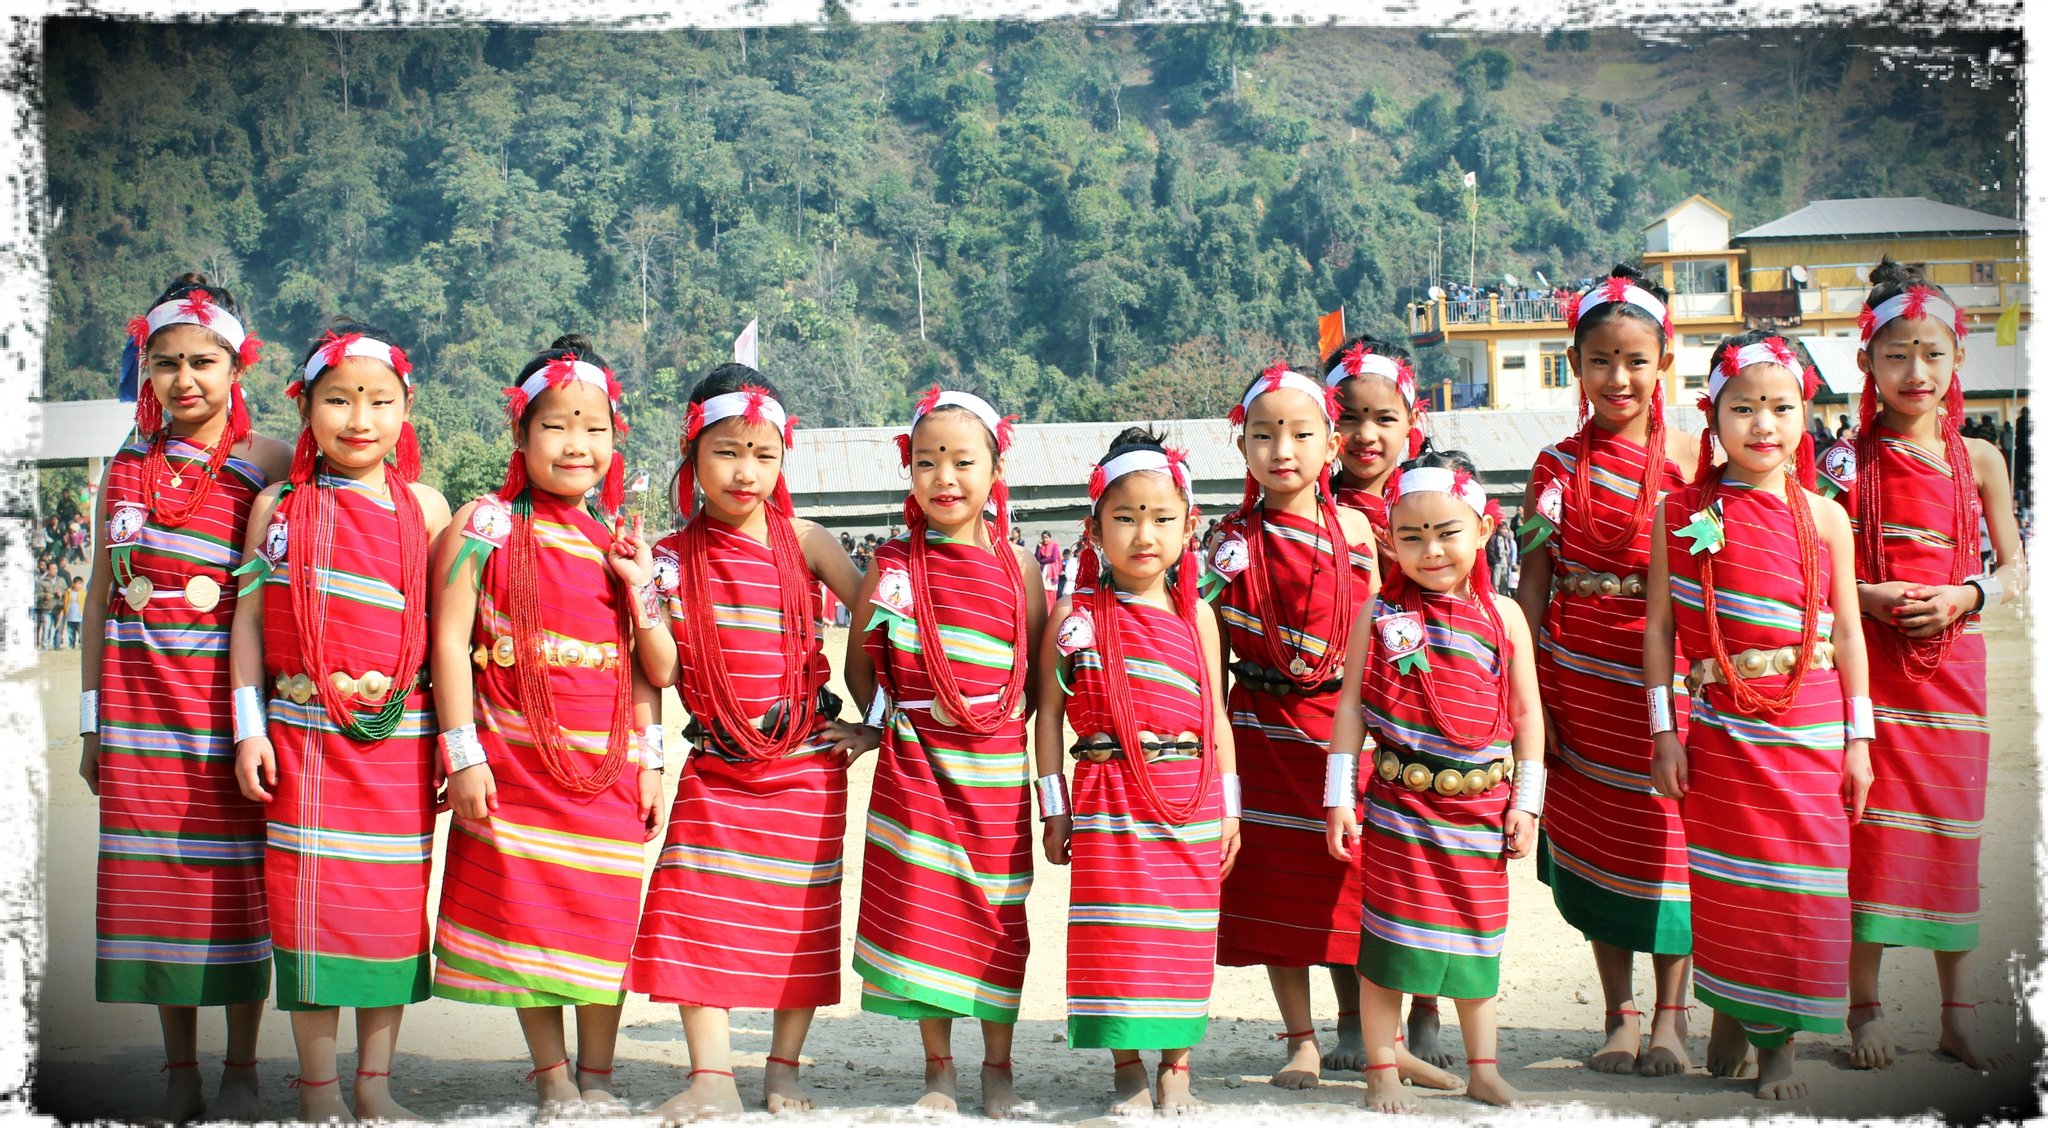 202 Arunachal Pradesh Dance Images, Stock Photos, 3D objects, & Vectors |  Shutterstock